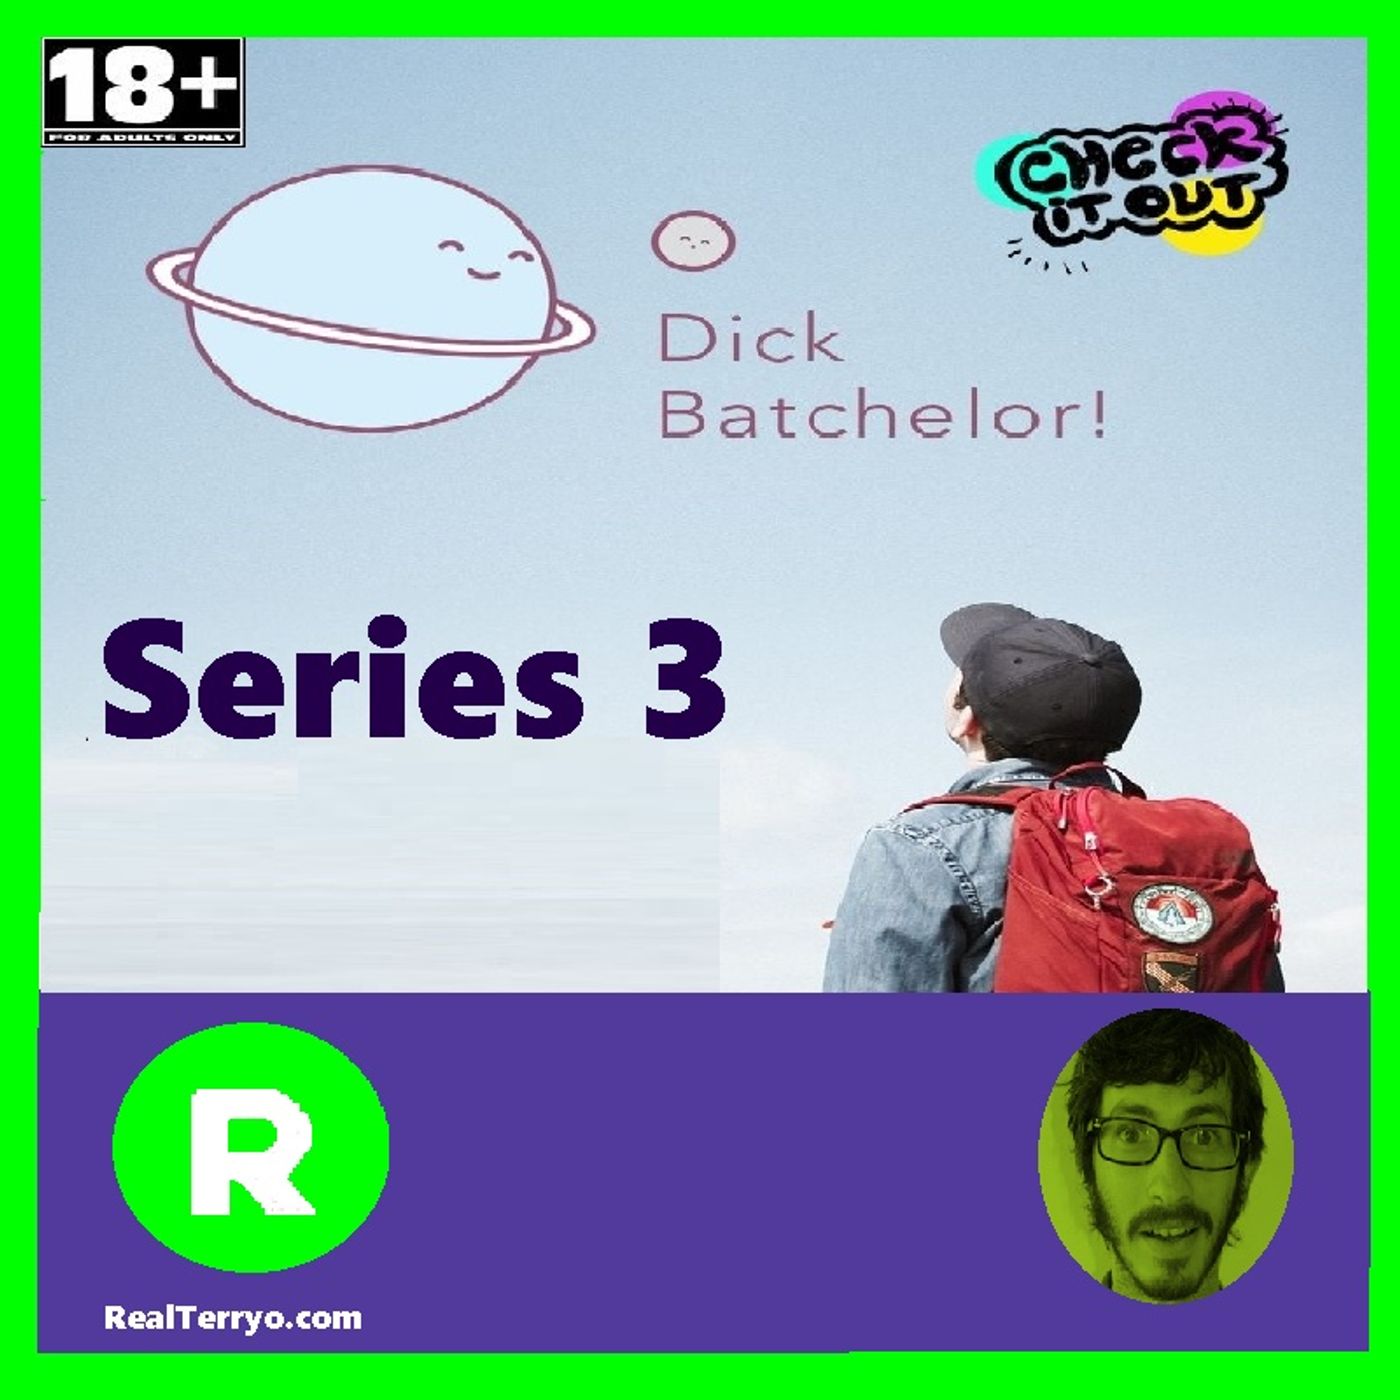 DickBatchelor Series 3 Episode 3 - Taking a break